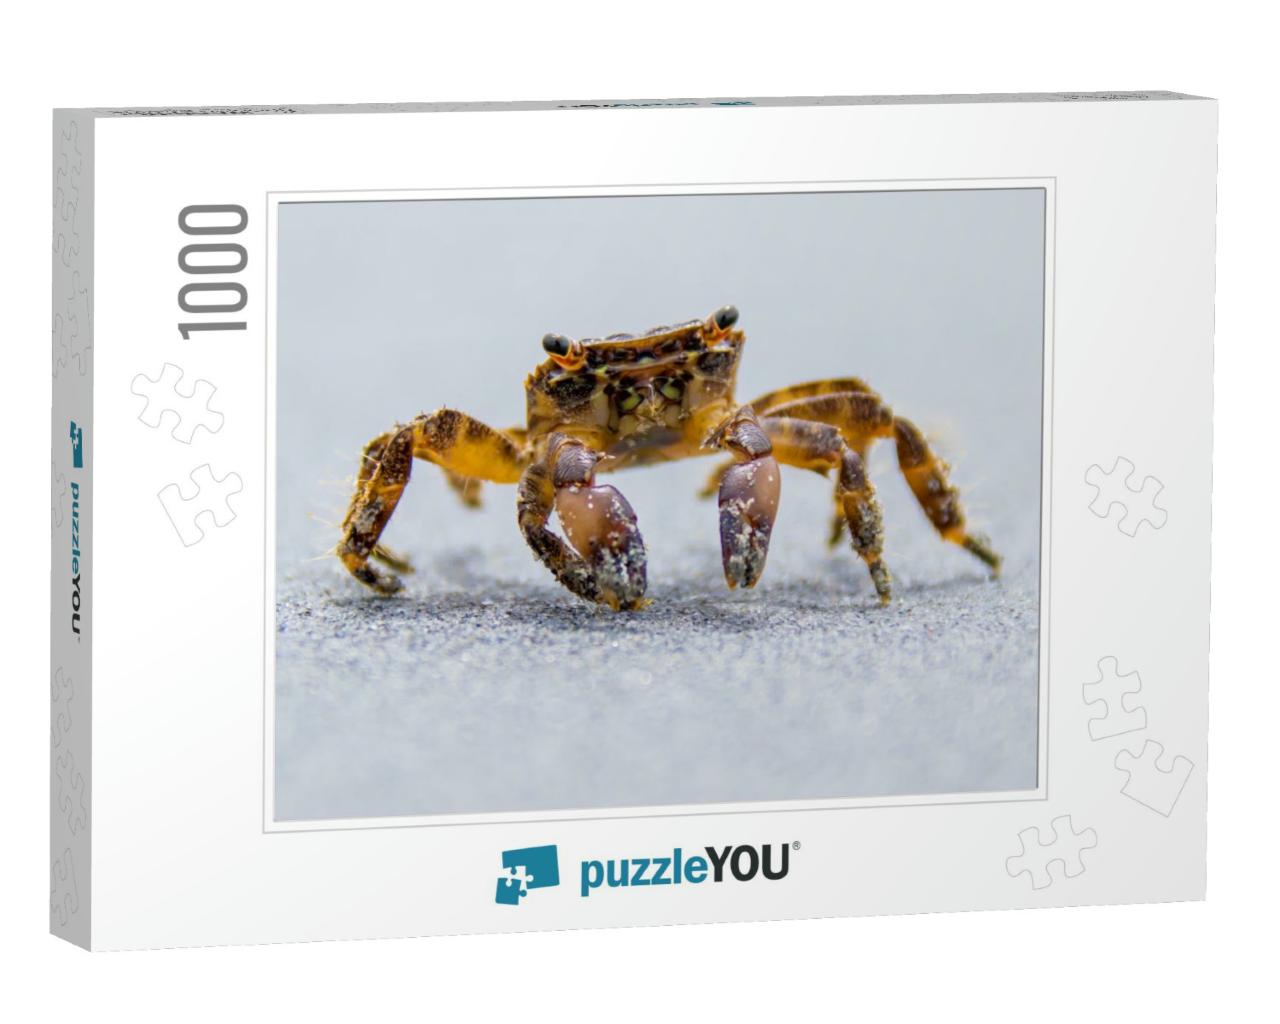 A Beach Crab Runs Along the Shore of a Sea... Jigsaw Puzzle with 1000 pieces